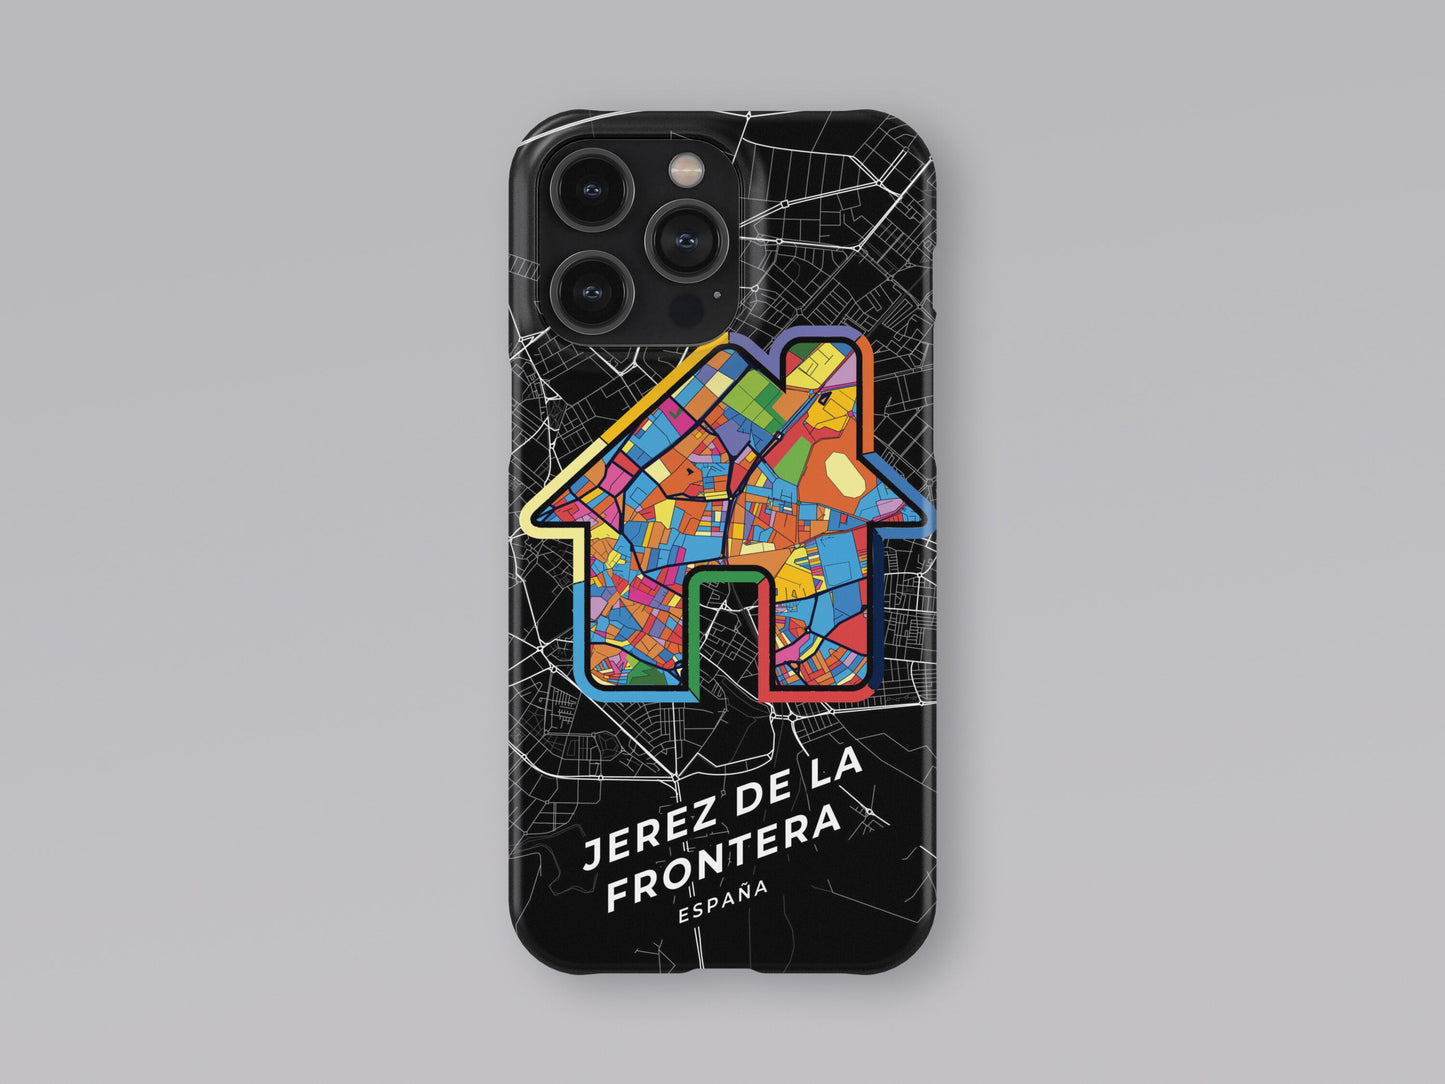 Jerez De La Frontera Spain slim phone case with colorful icon. Birthday, wedding or housewarming gift. Couple match cases. 3